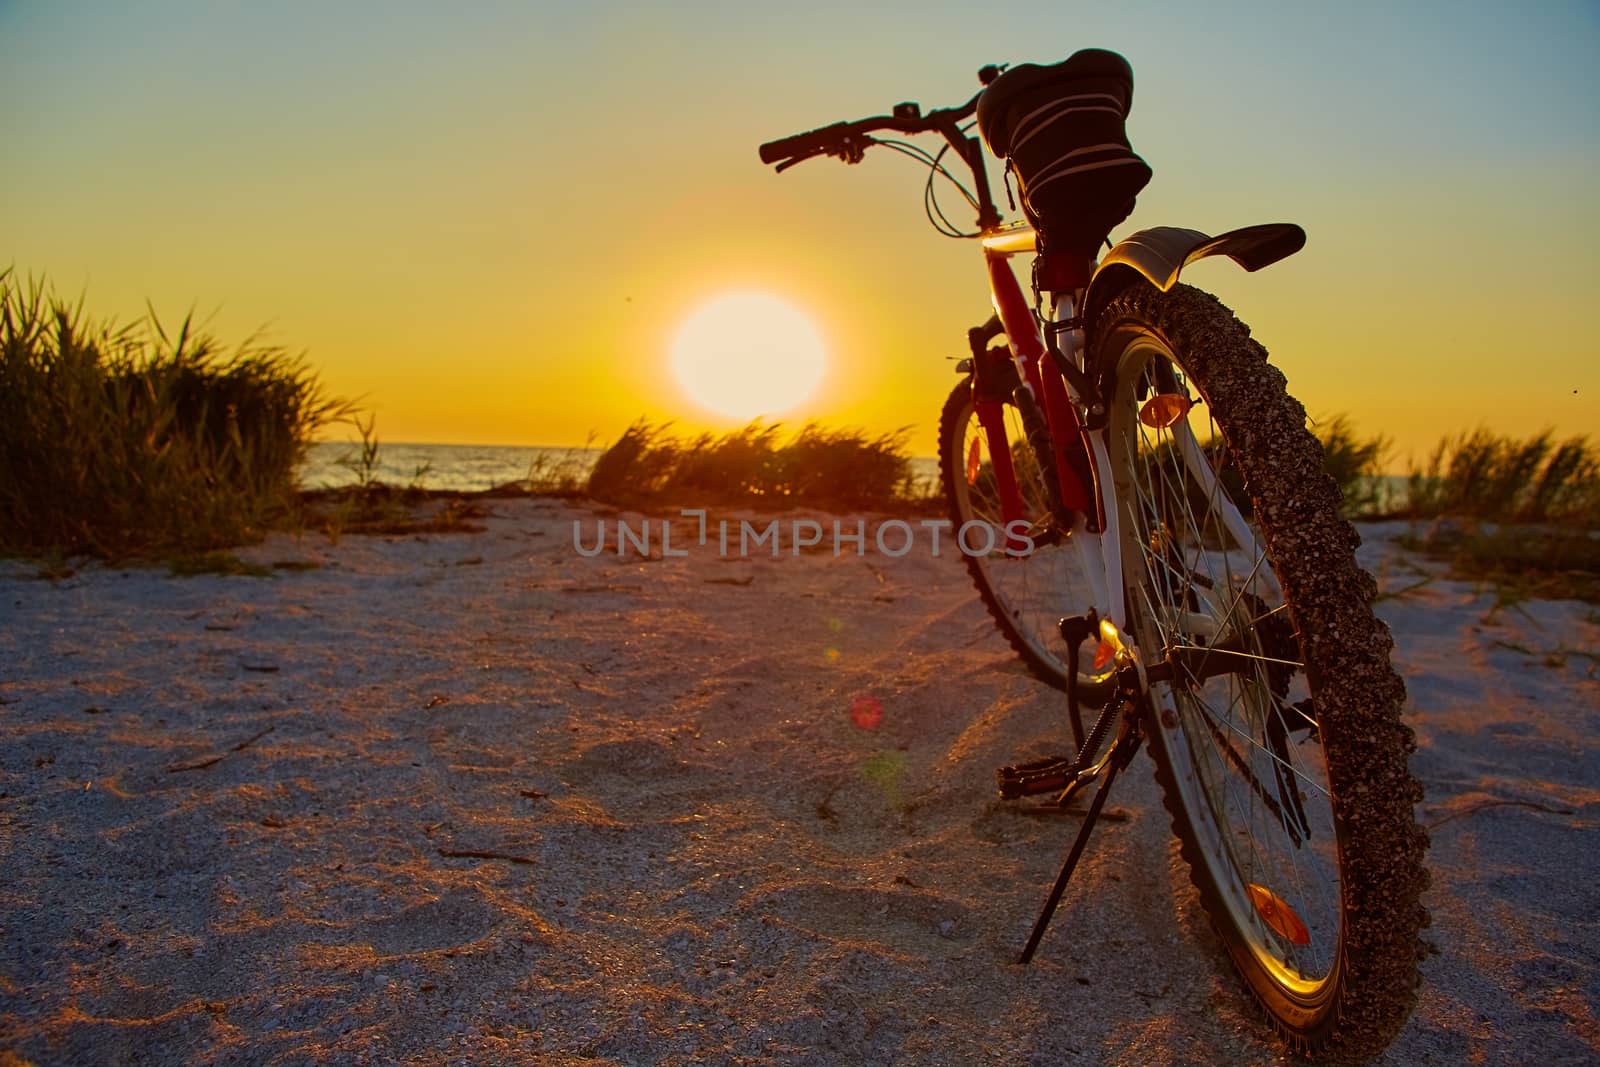 Bicycle at the beach by sarymsakov